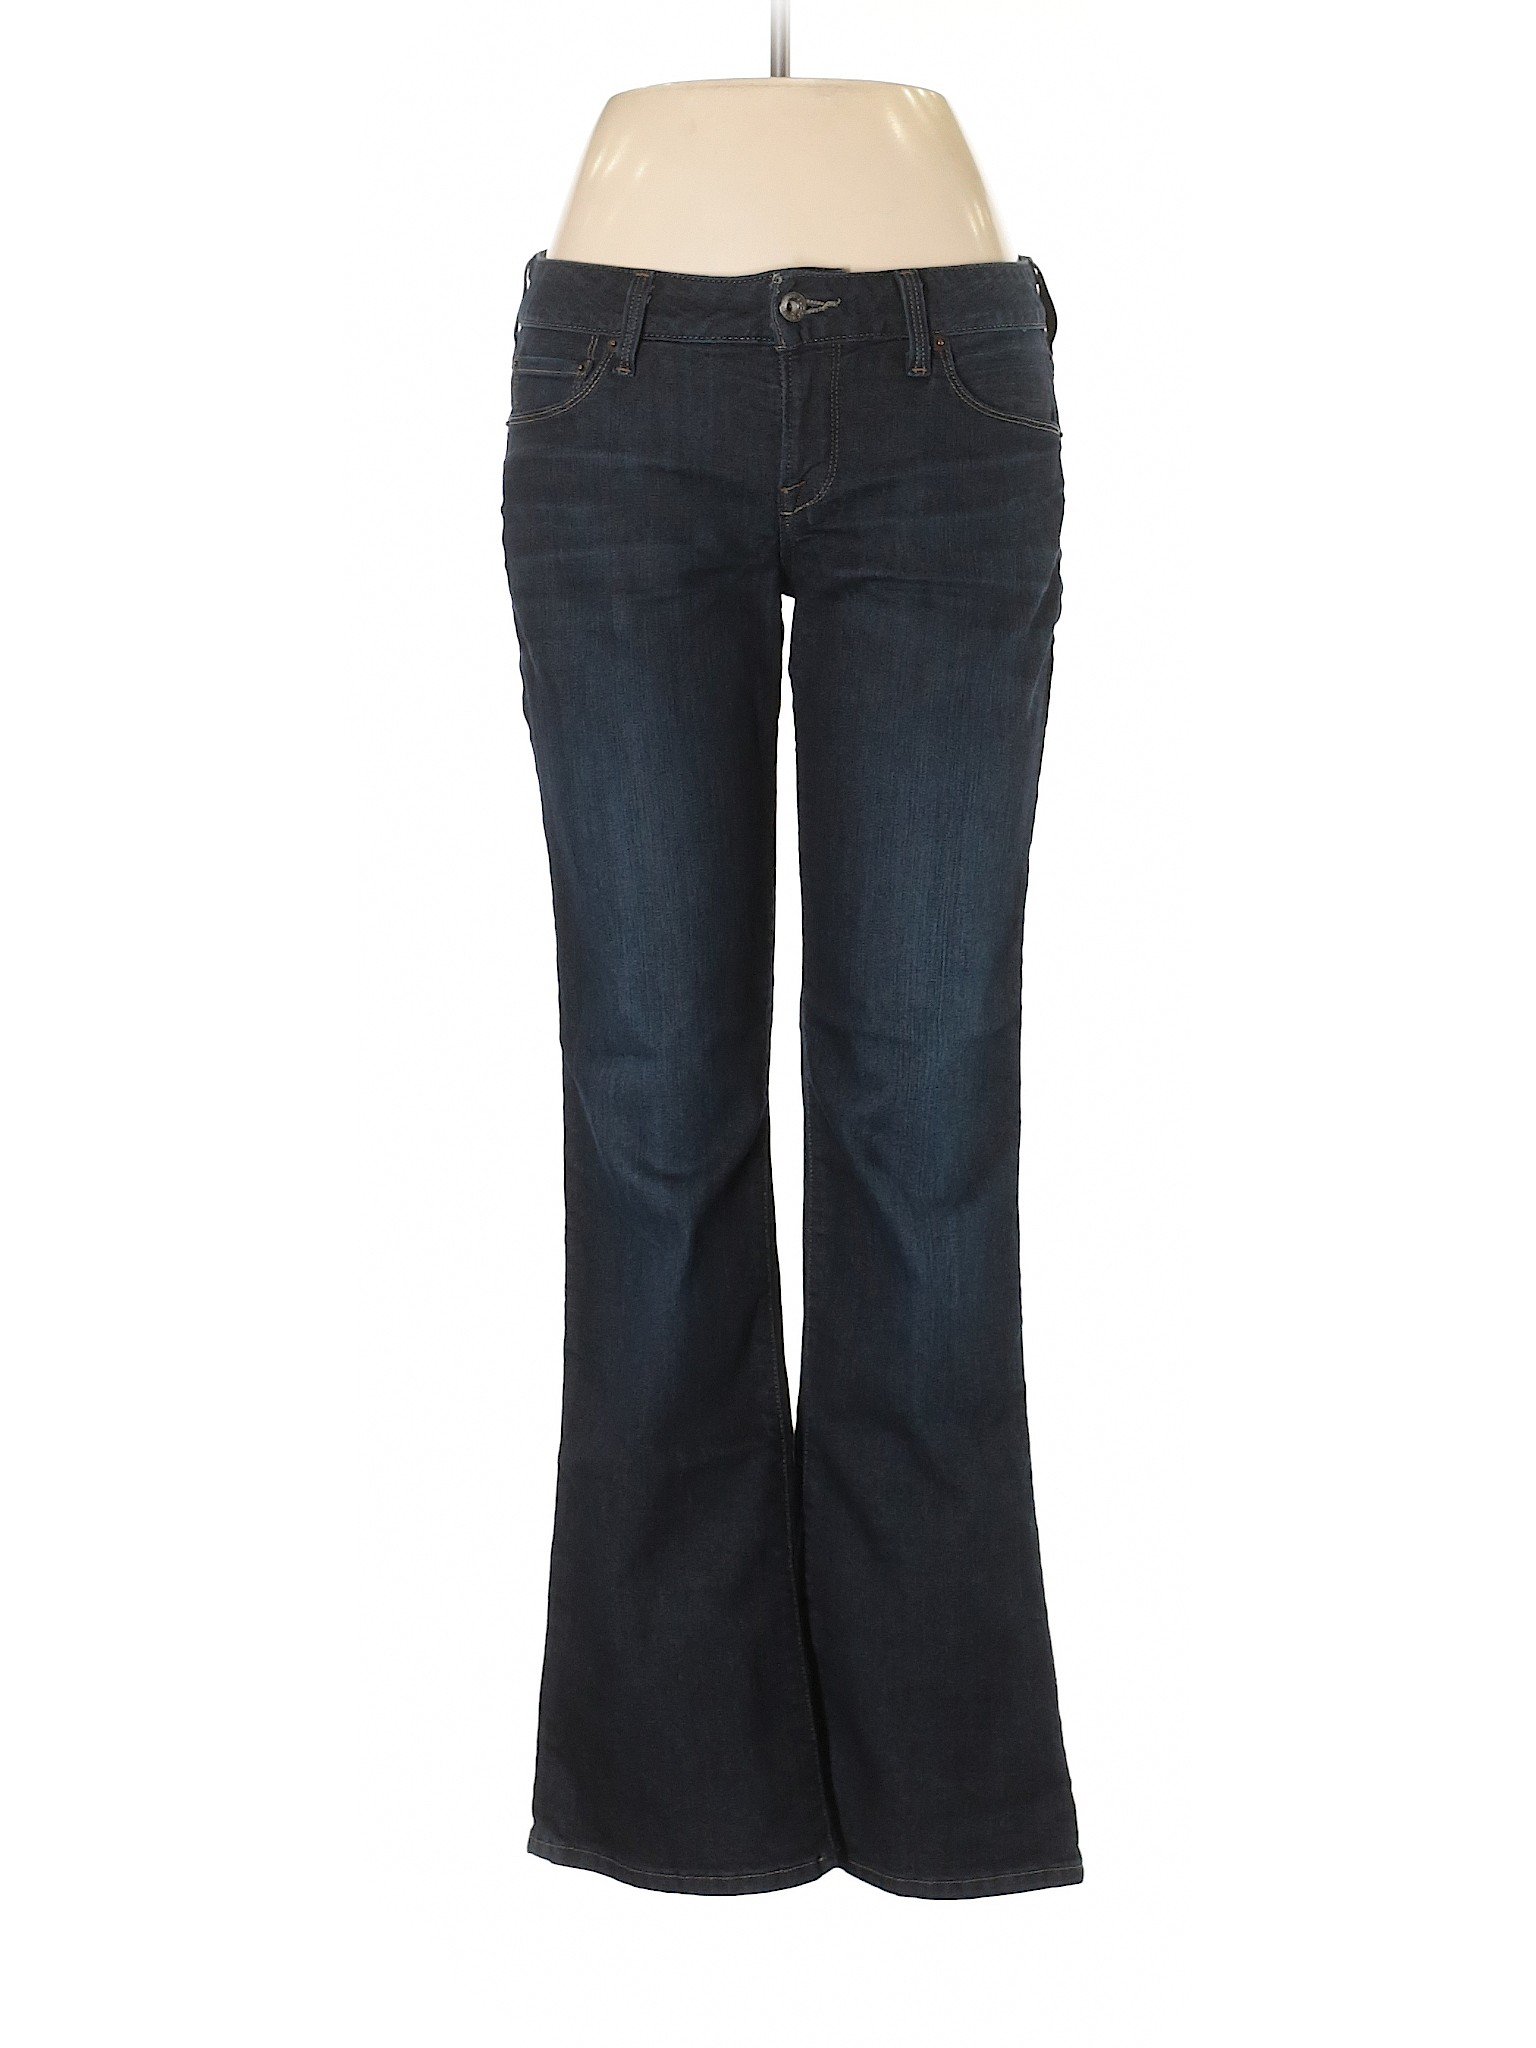 Lucky Brand Women Black Jeans 8 | eBay